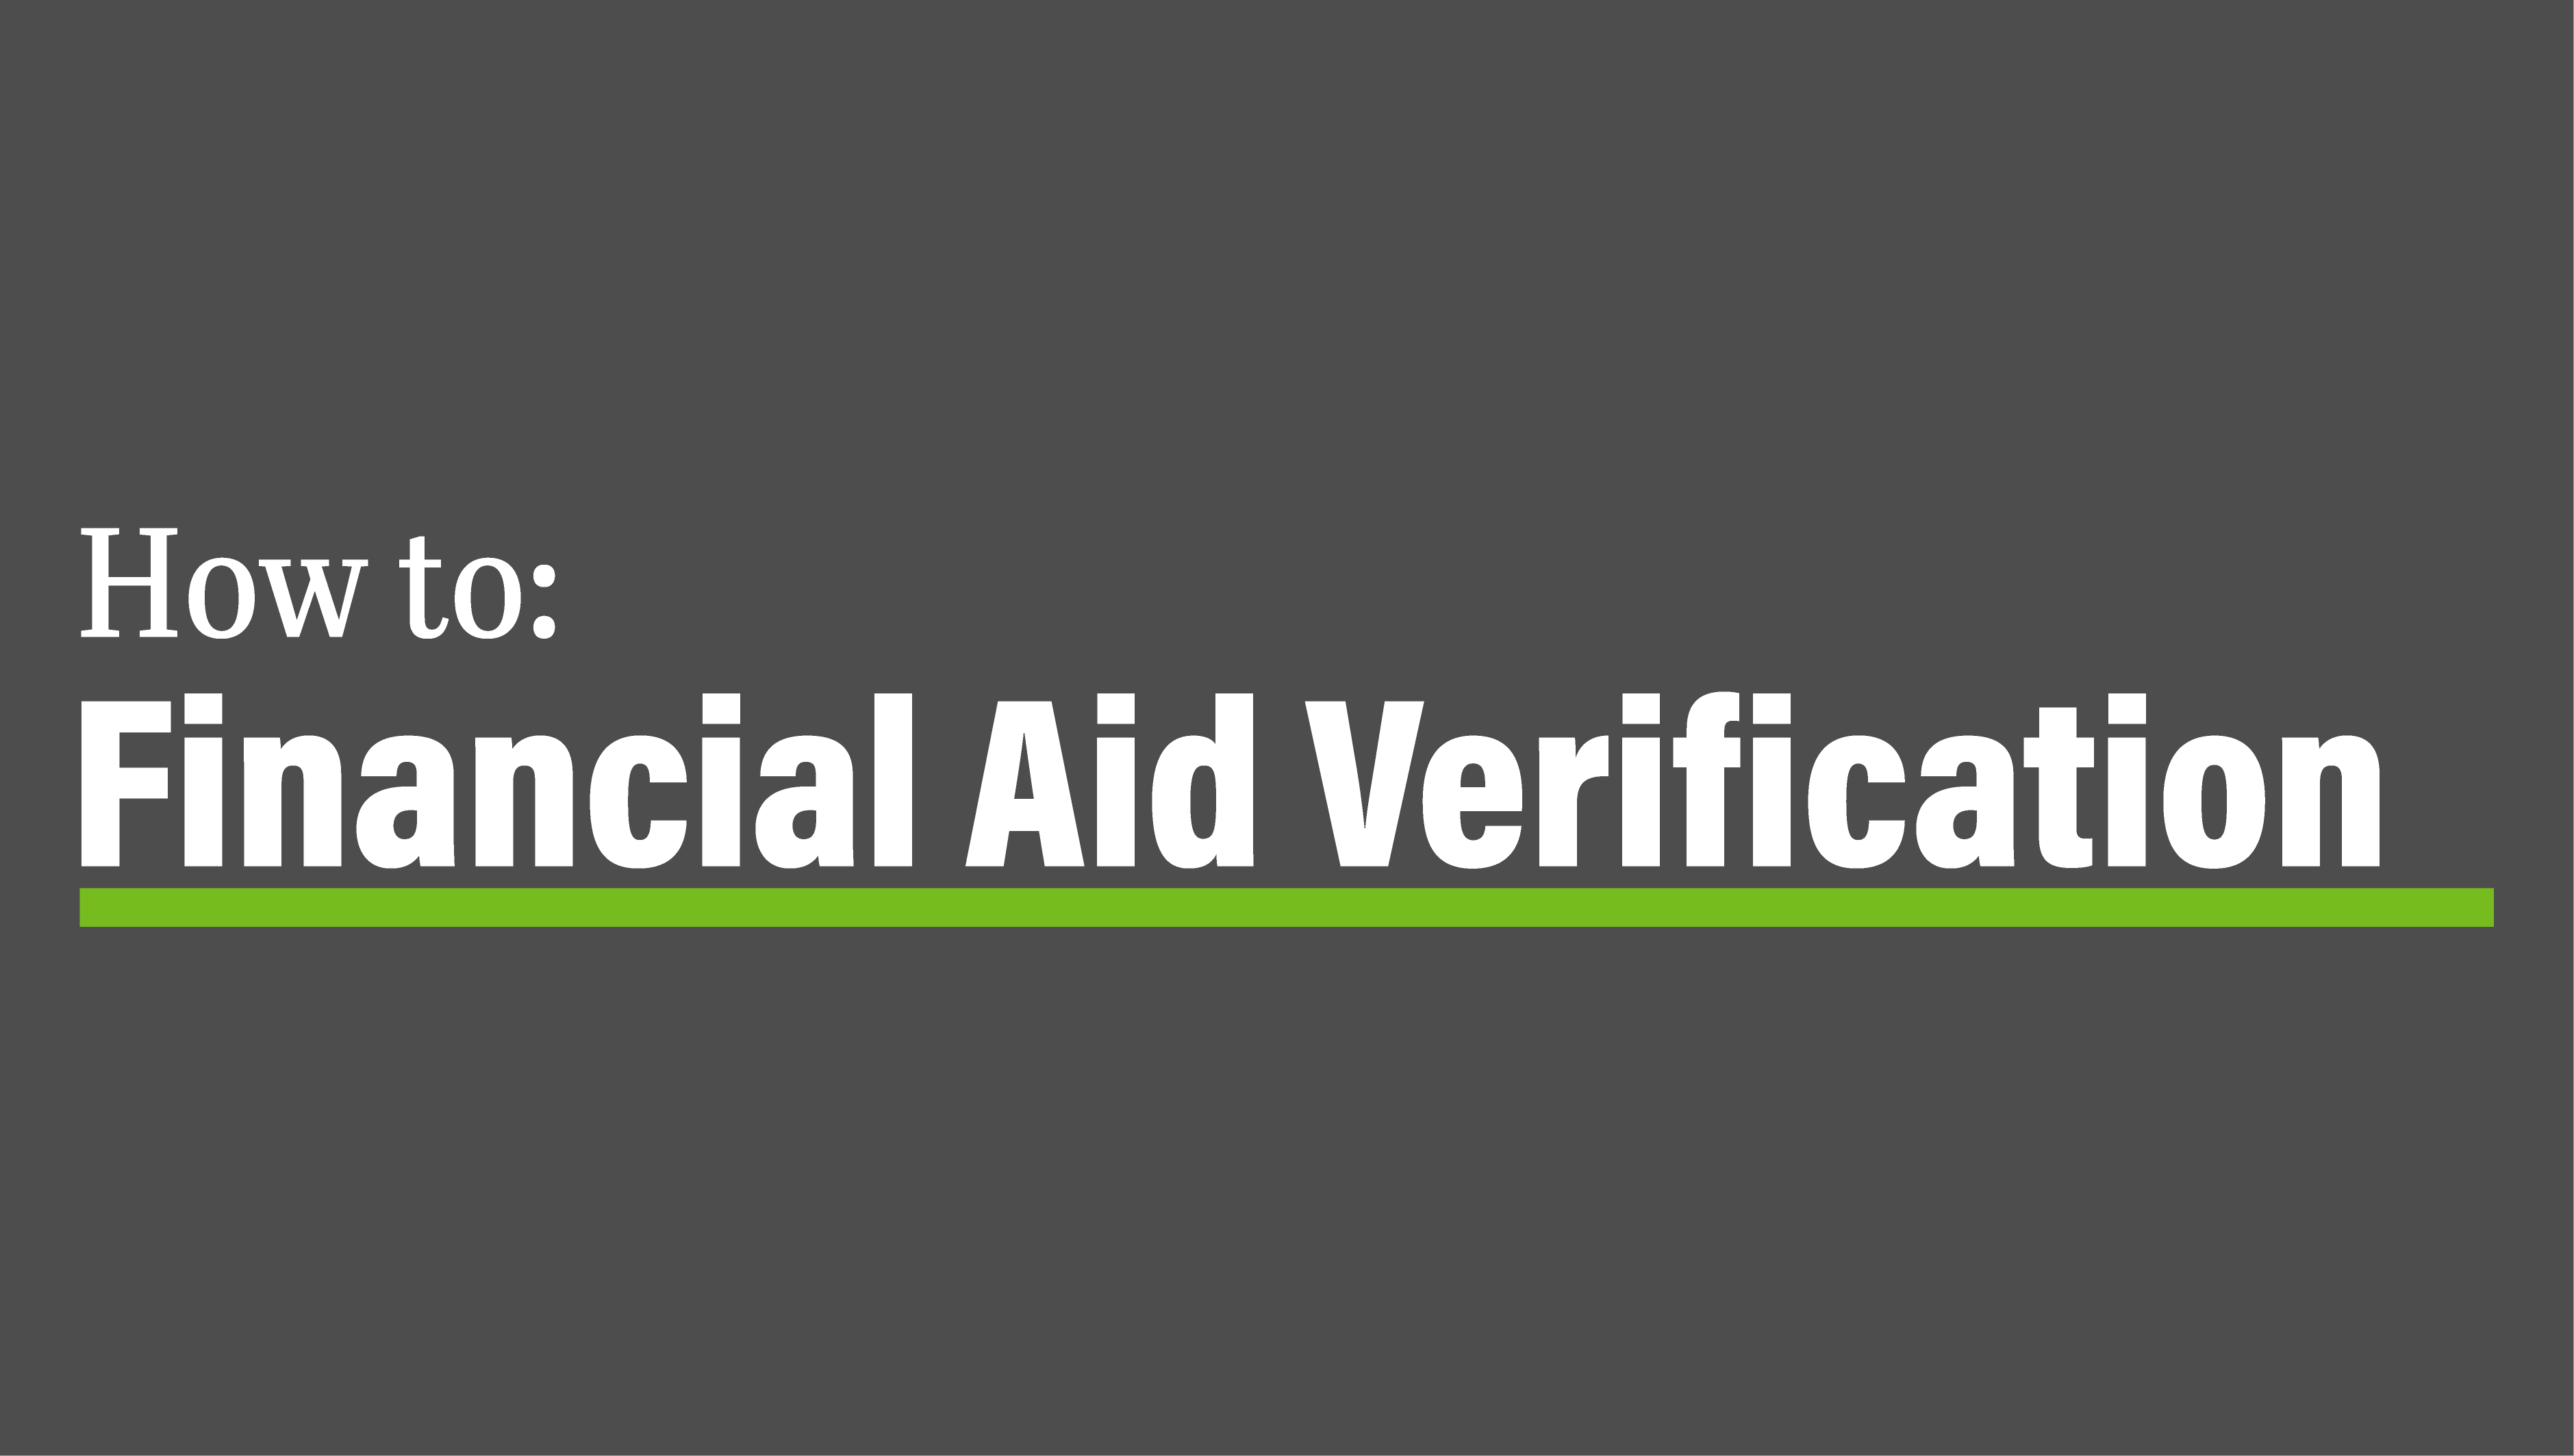 Financial Aid Verification